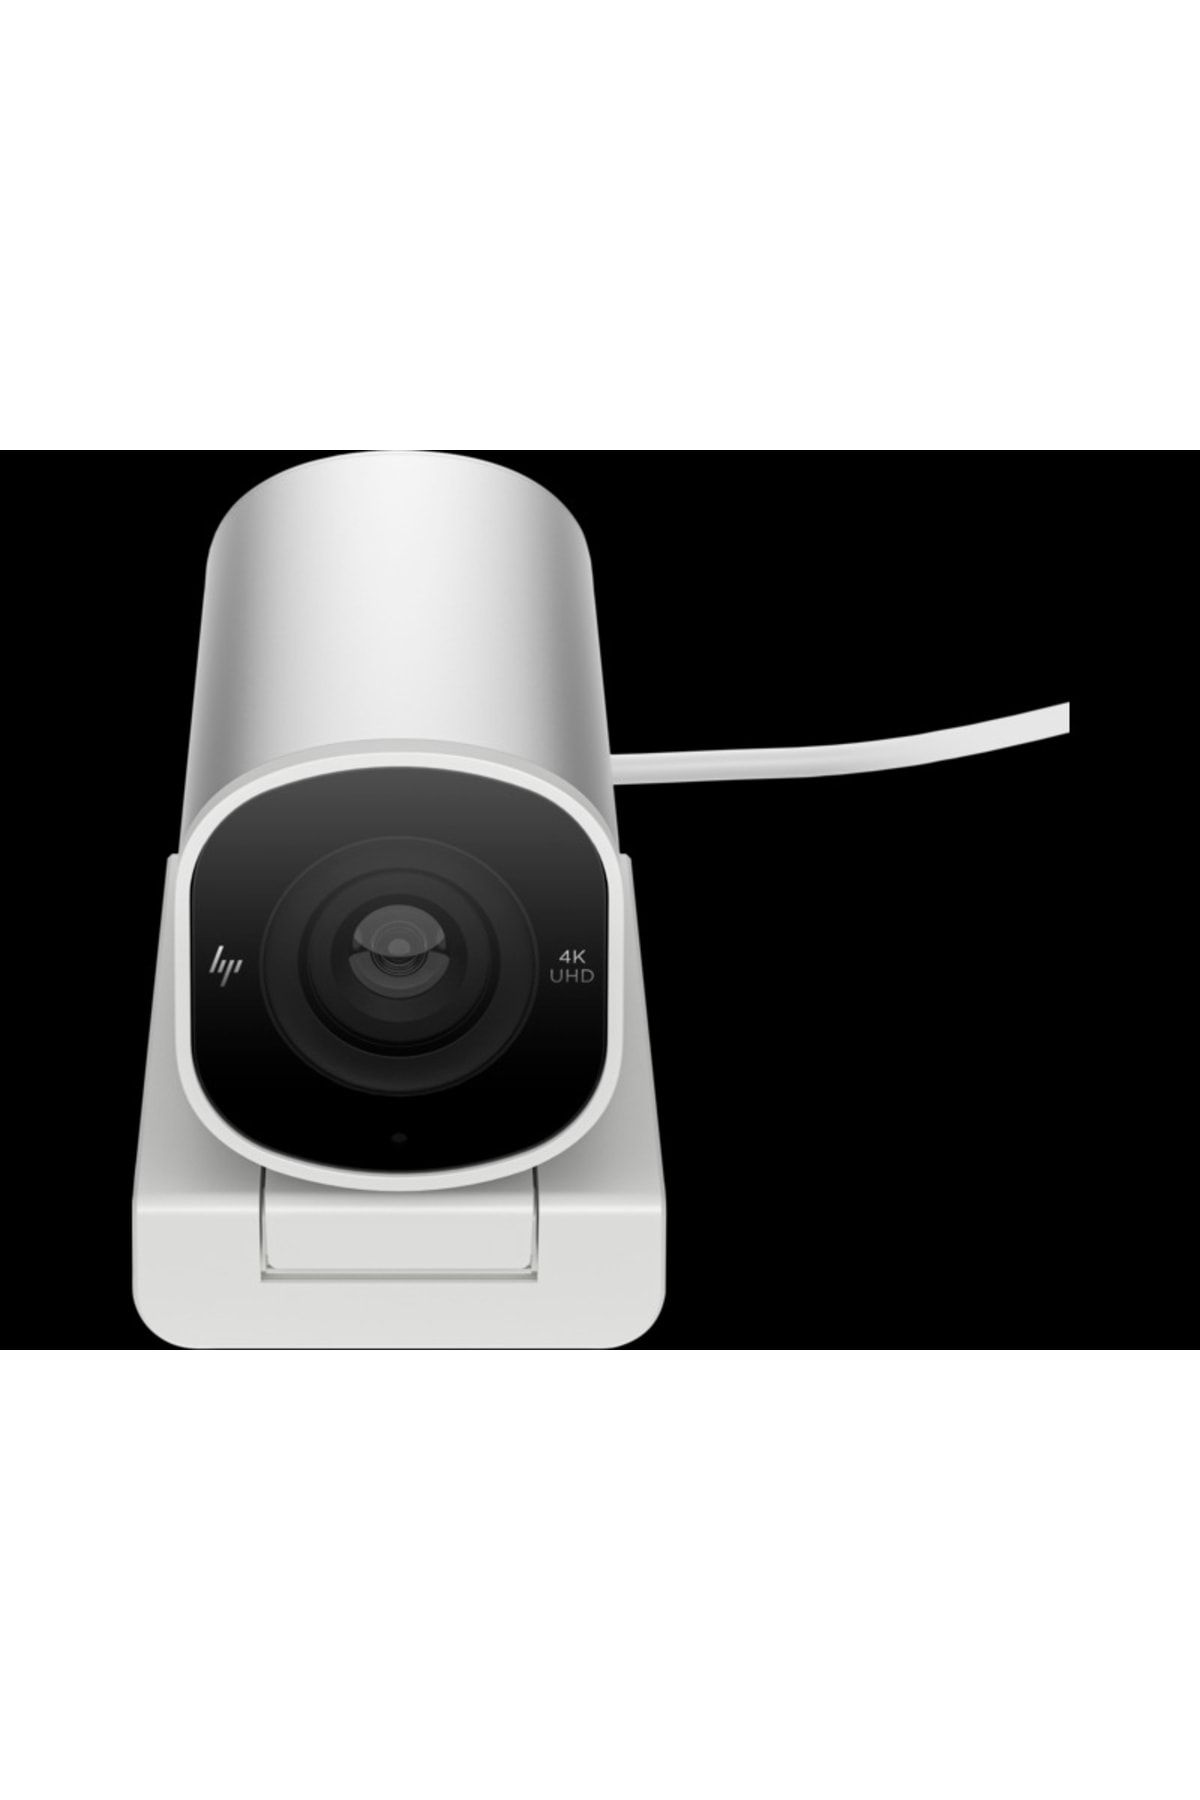 HP 695j6aa 960 4k Yayın Web Kamerası Yapay Zeka Destekli Hdr 18 Mm F2.0 Geniş Lens